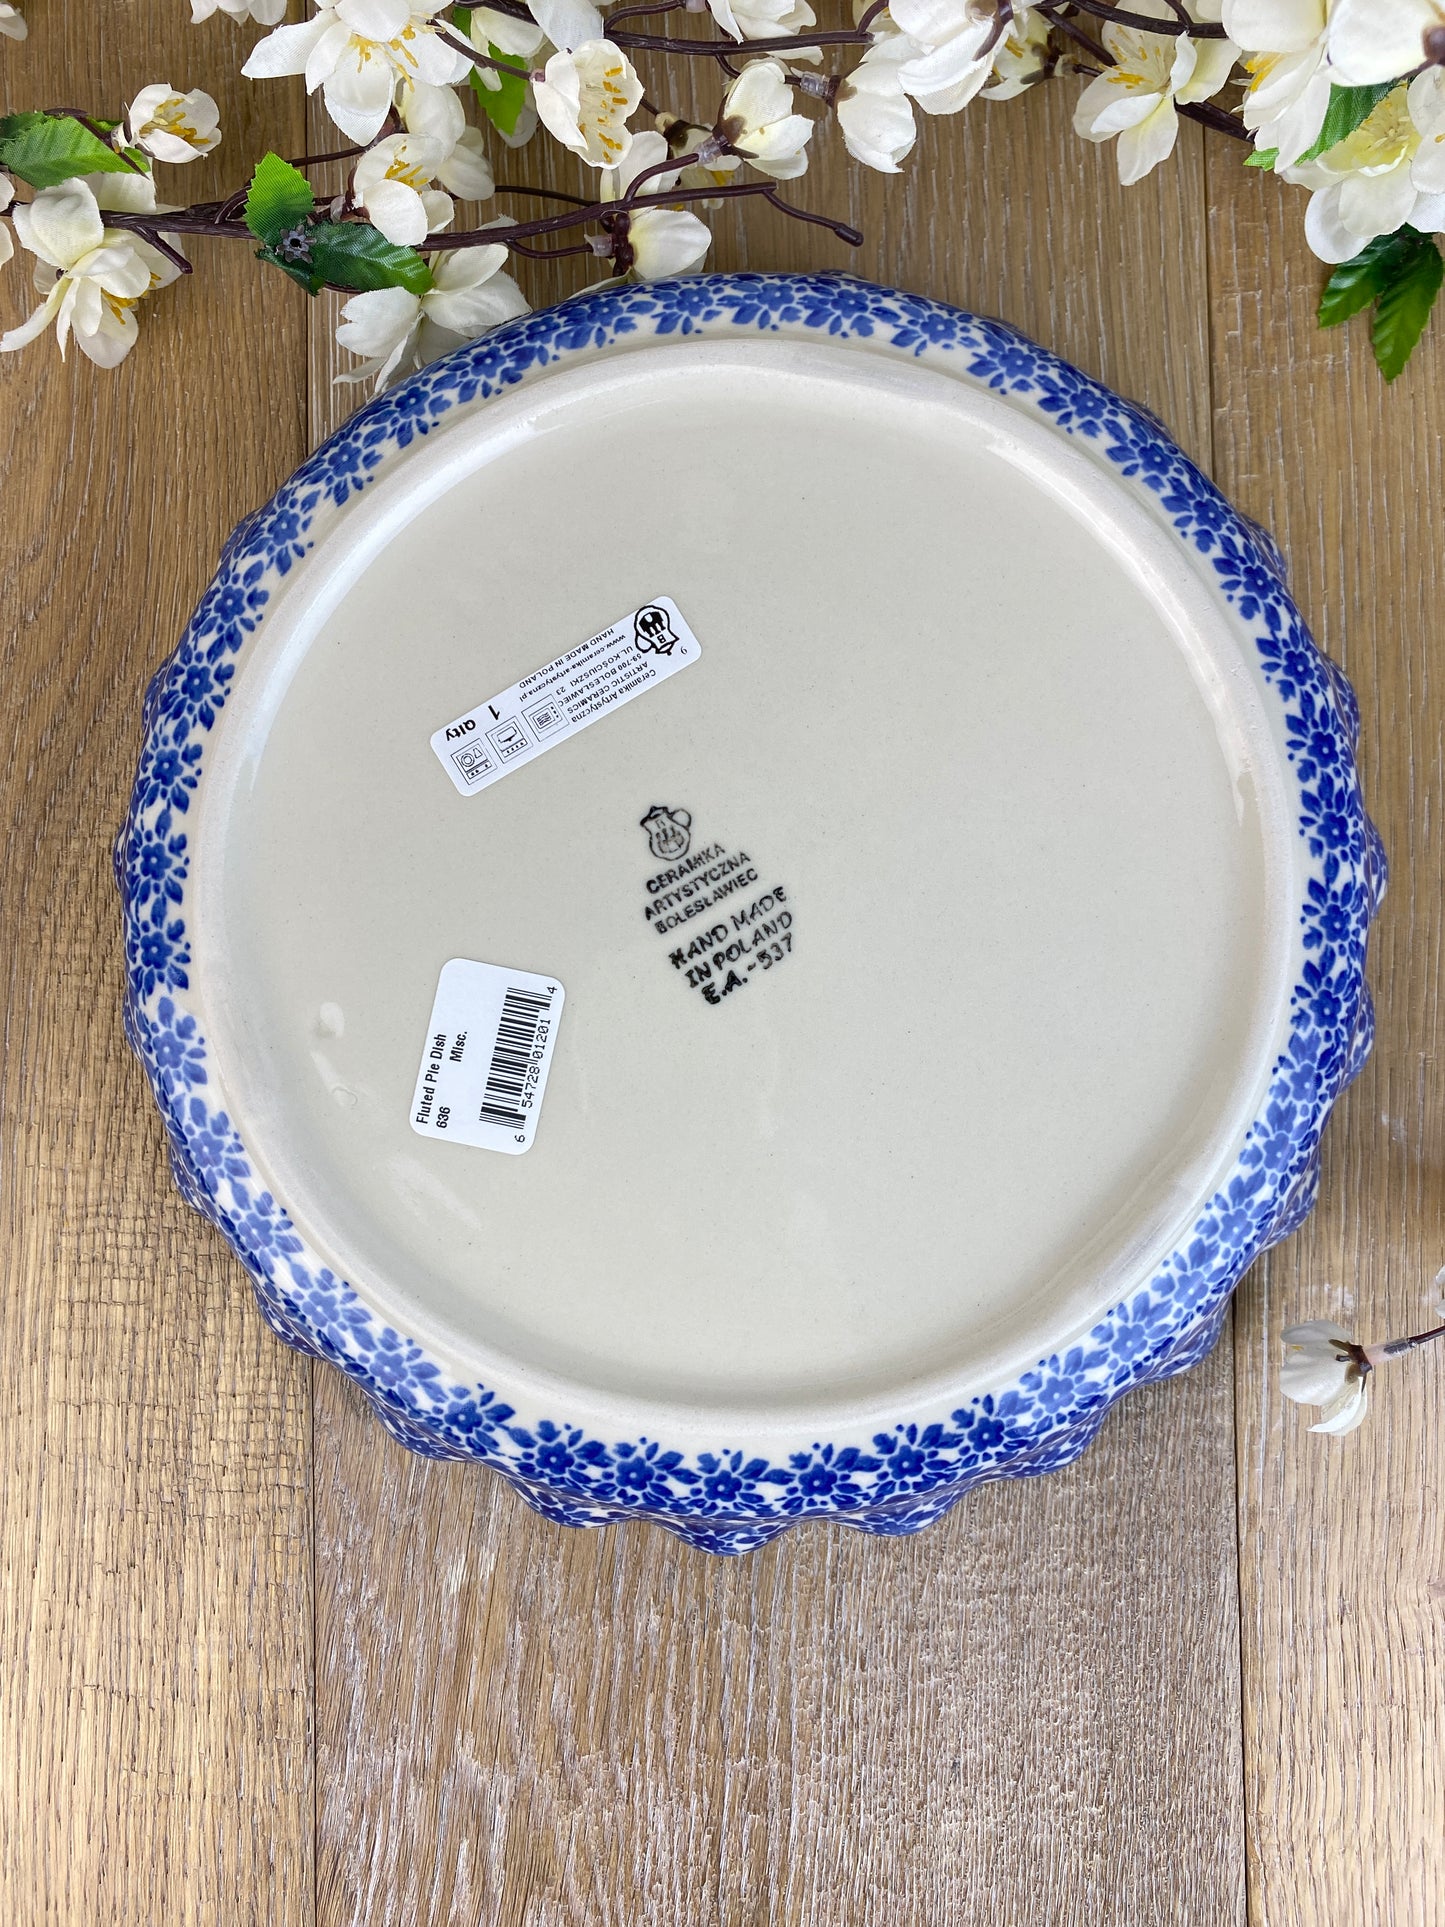 Ruffled Pie Plate / Round Baking Dish - Shape 636 - Pattern 2396